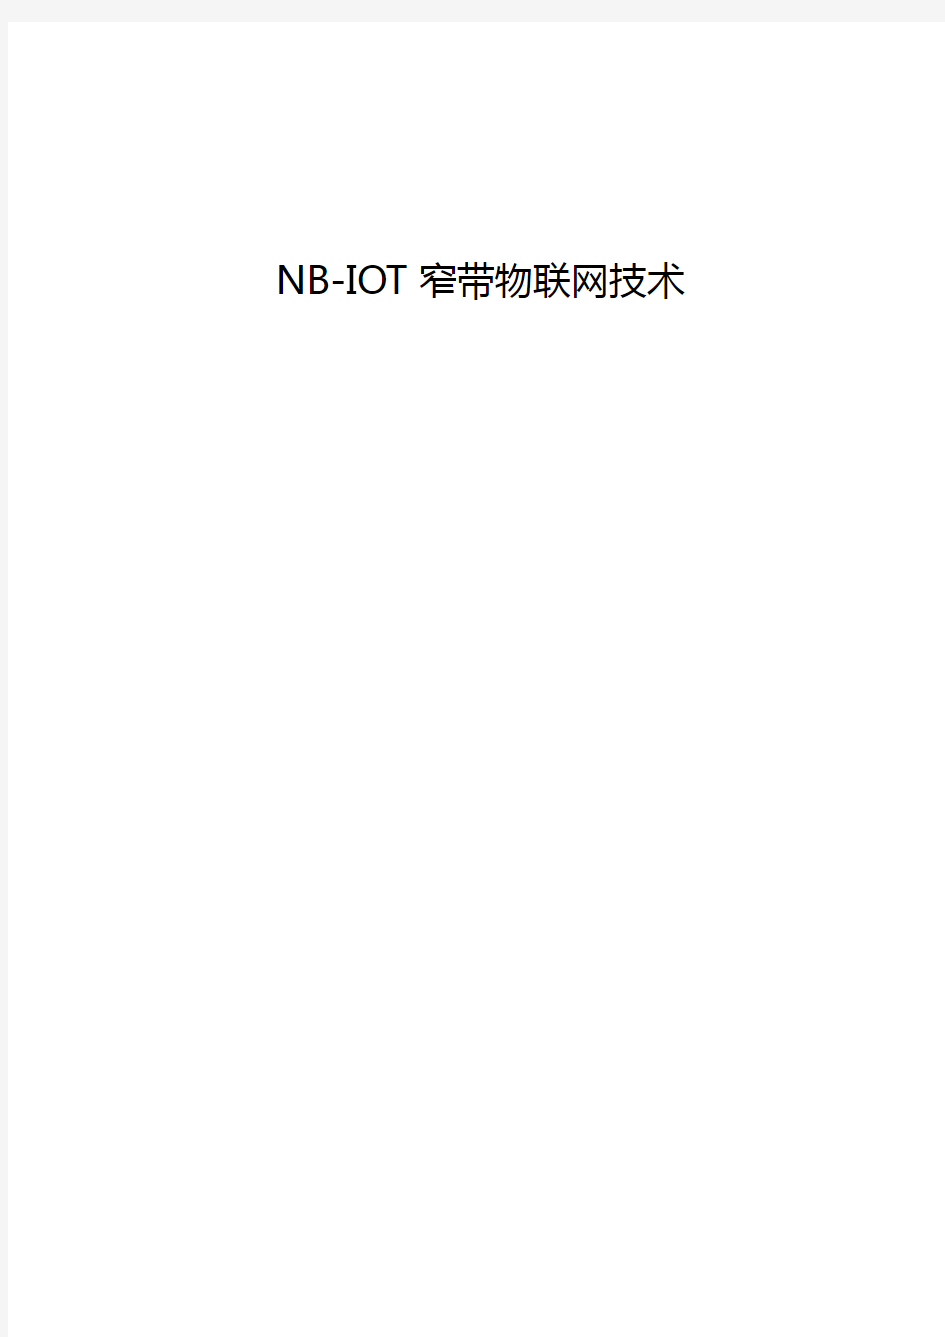 NB~LOT窄带物联网应用技术